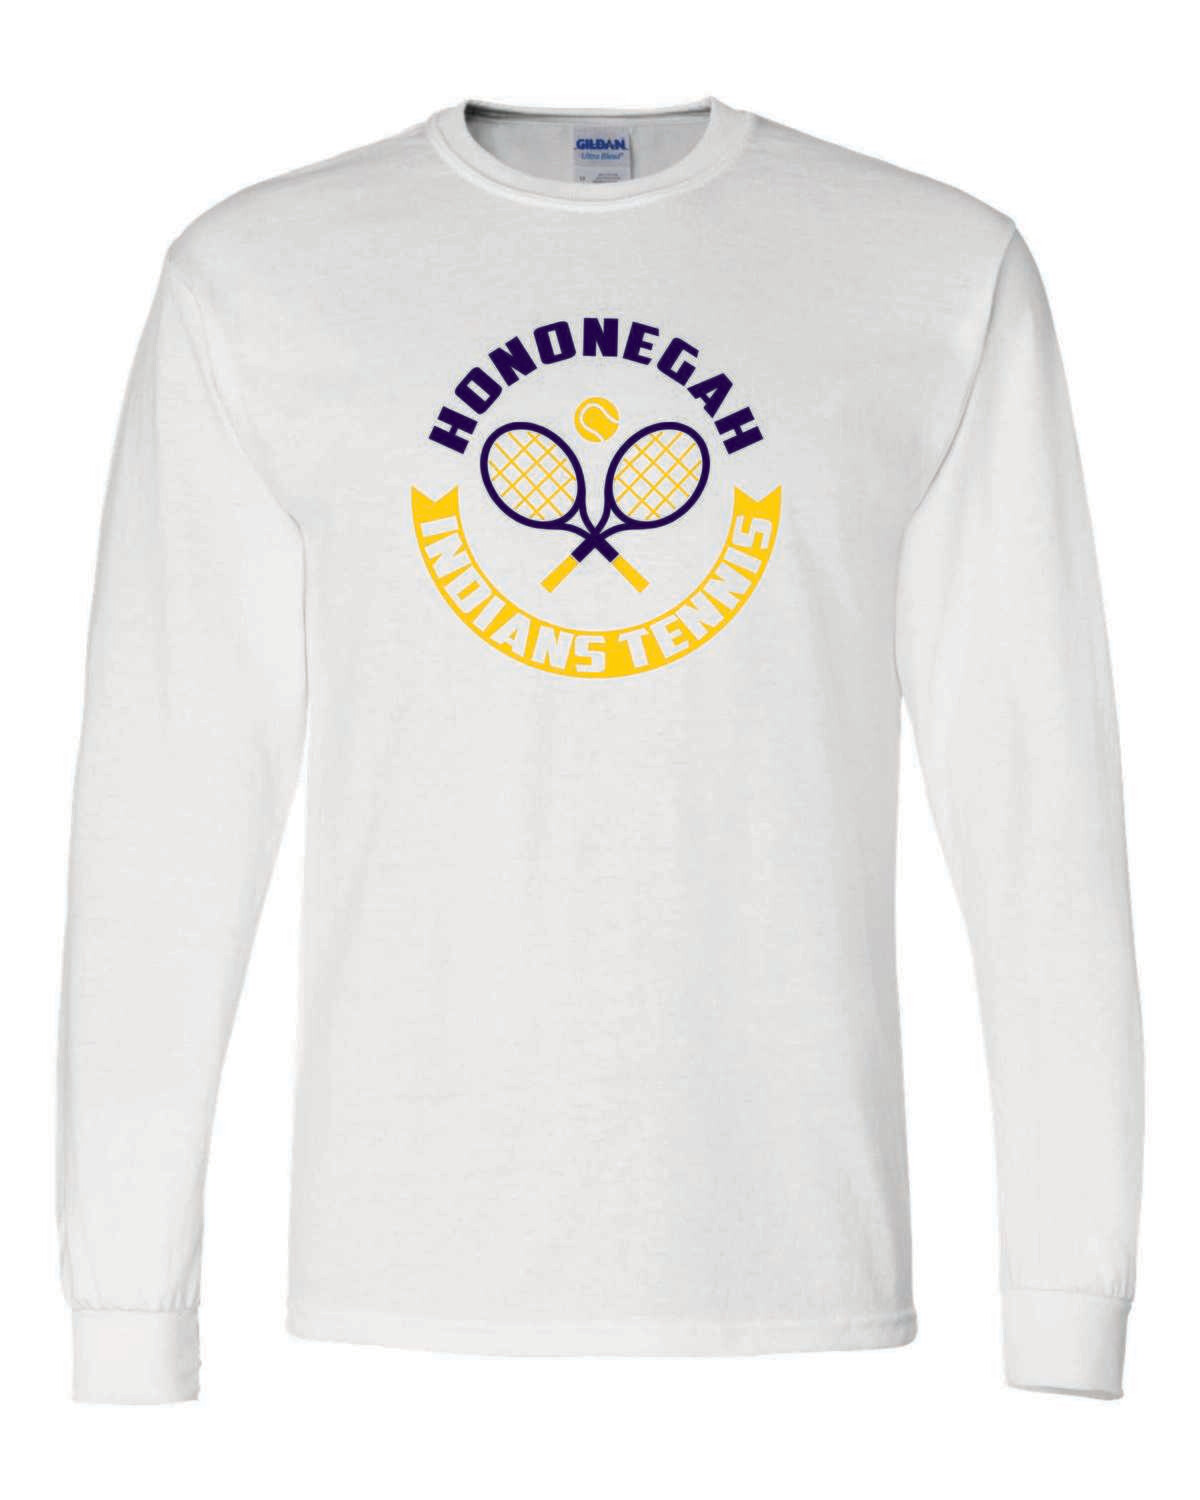 Hononegah Tennis Long Sleeve T-shirt, 4 Color Options